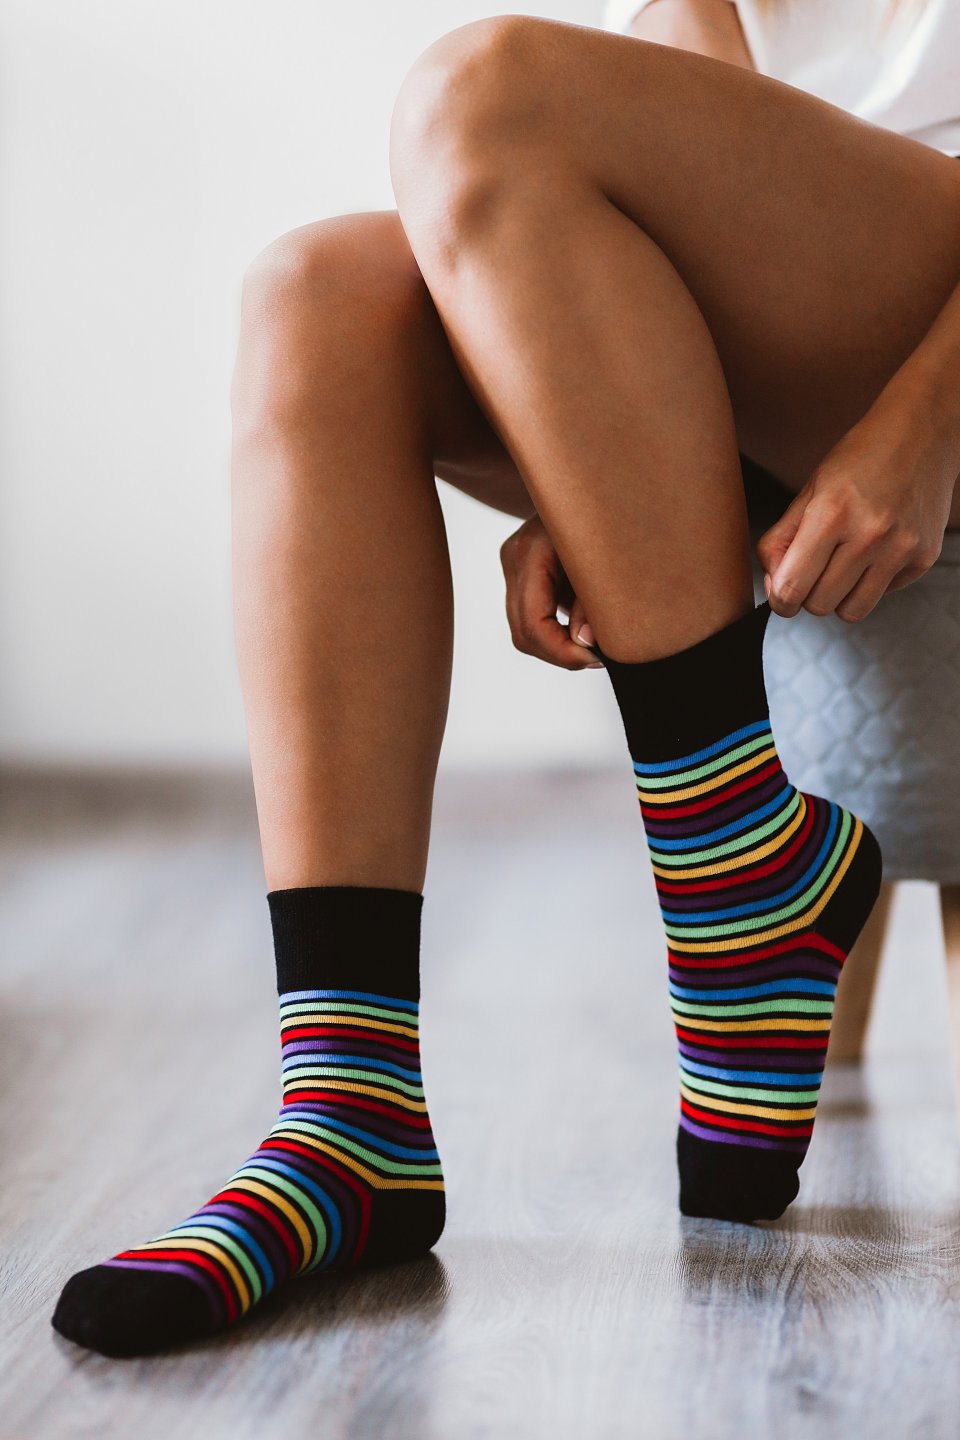 Barefoot Socks - Crew - Rainbow